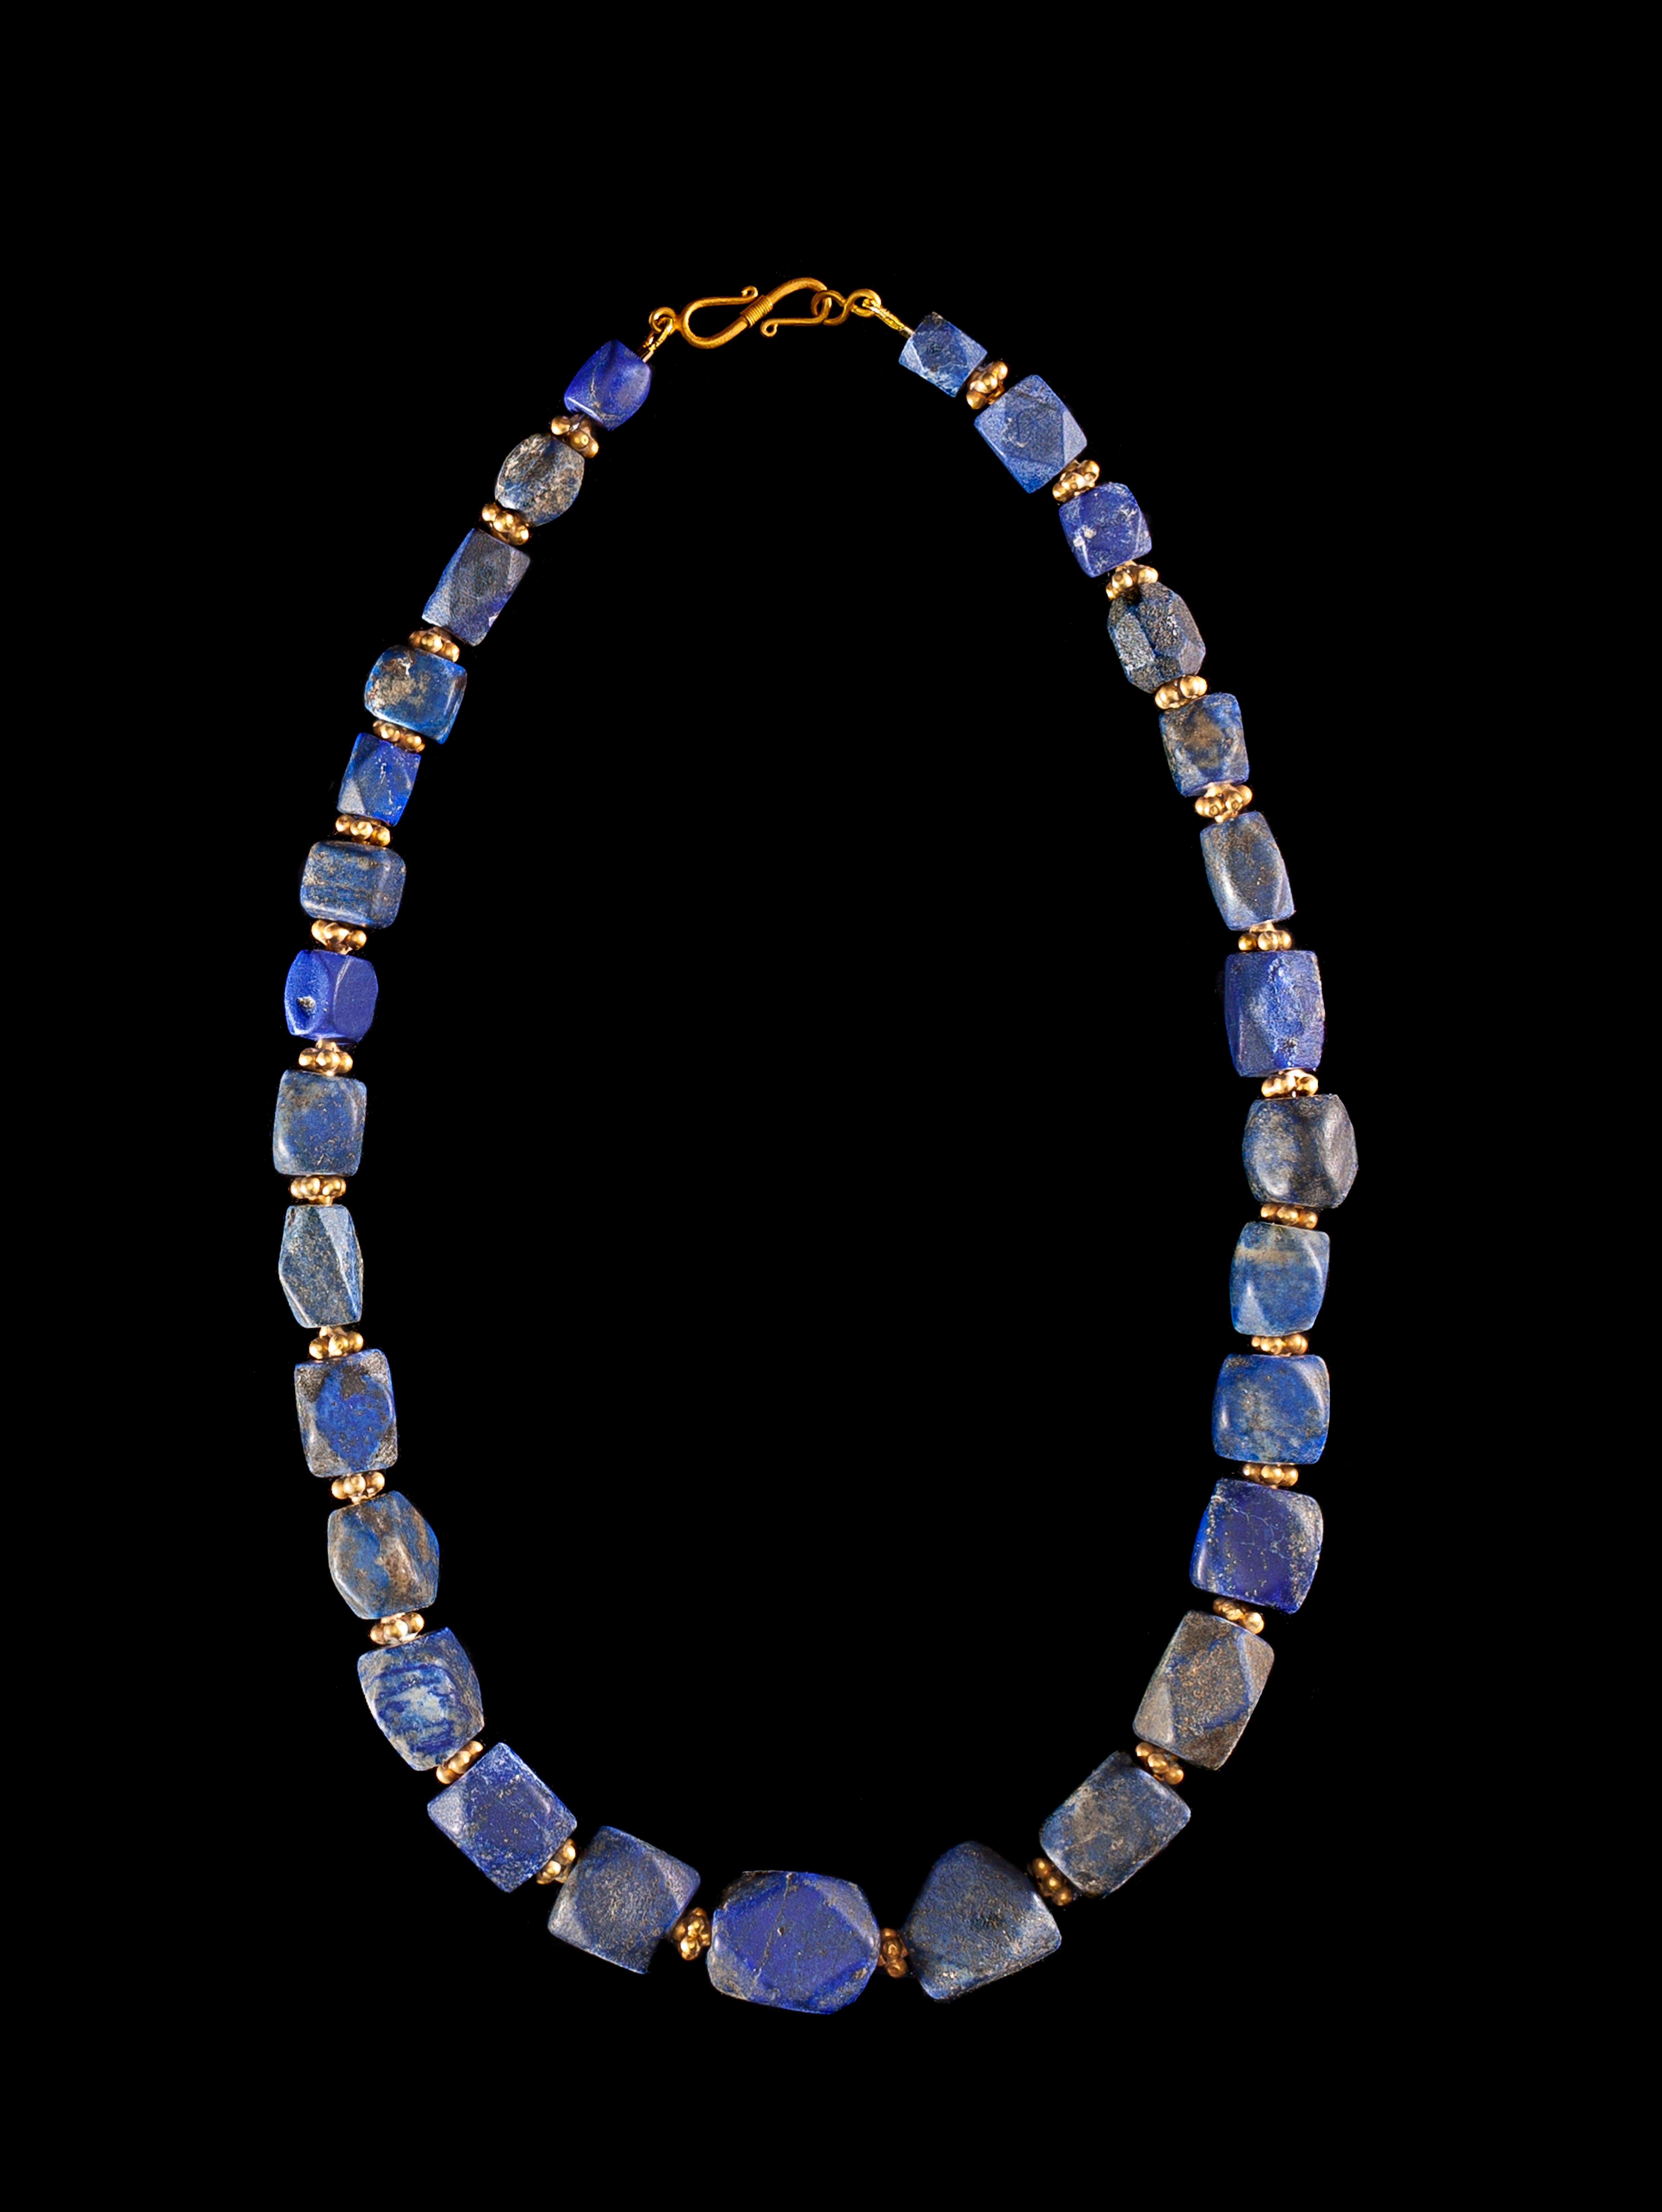 ancient lapis lazuli jewelry